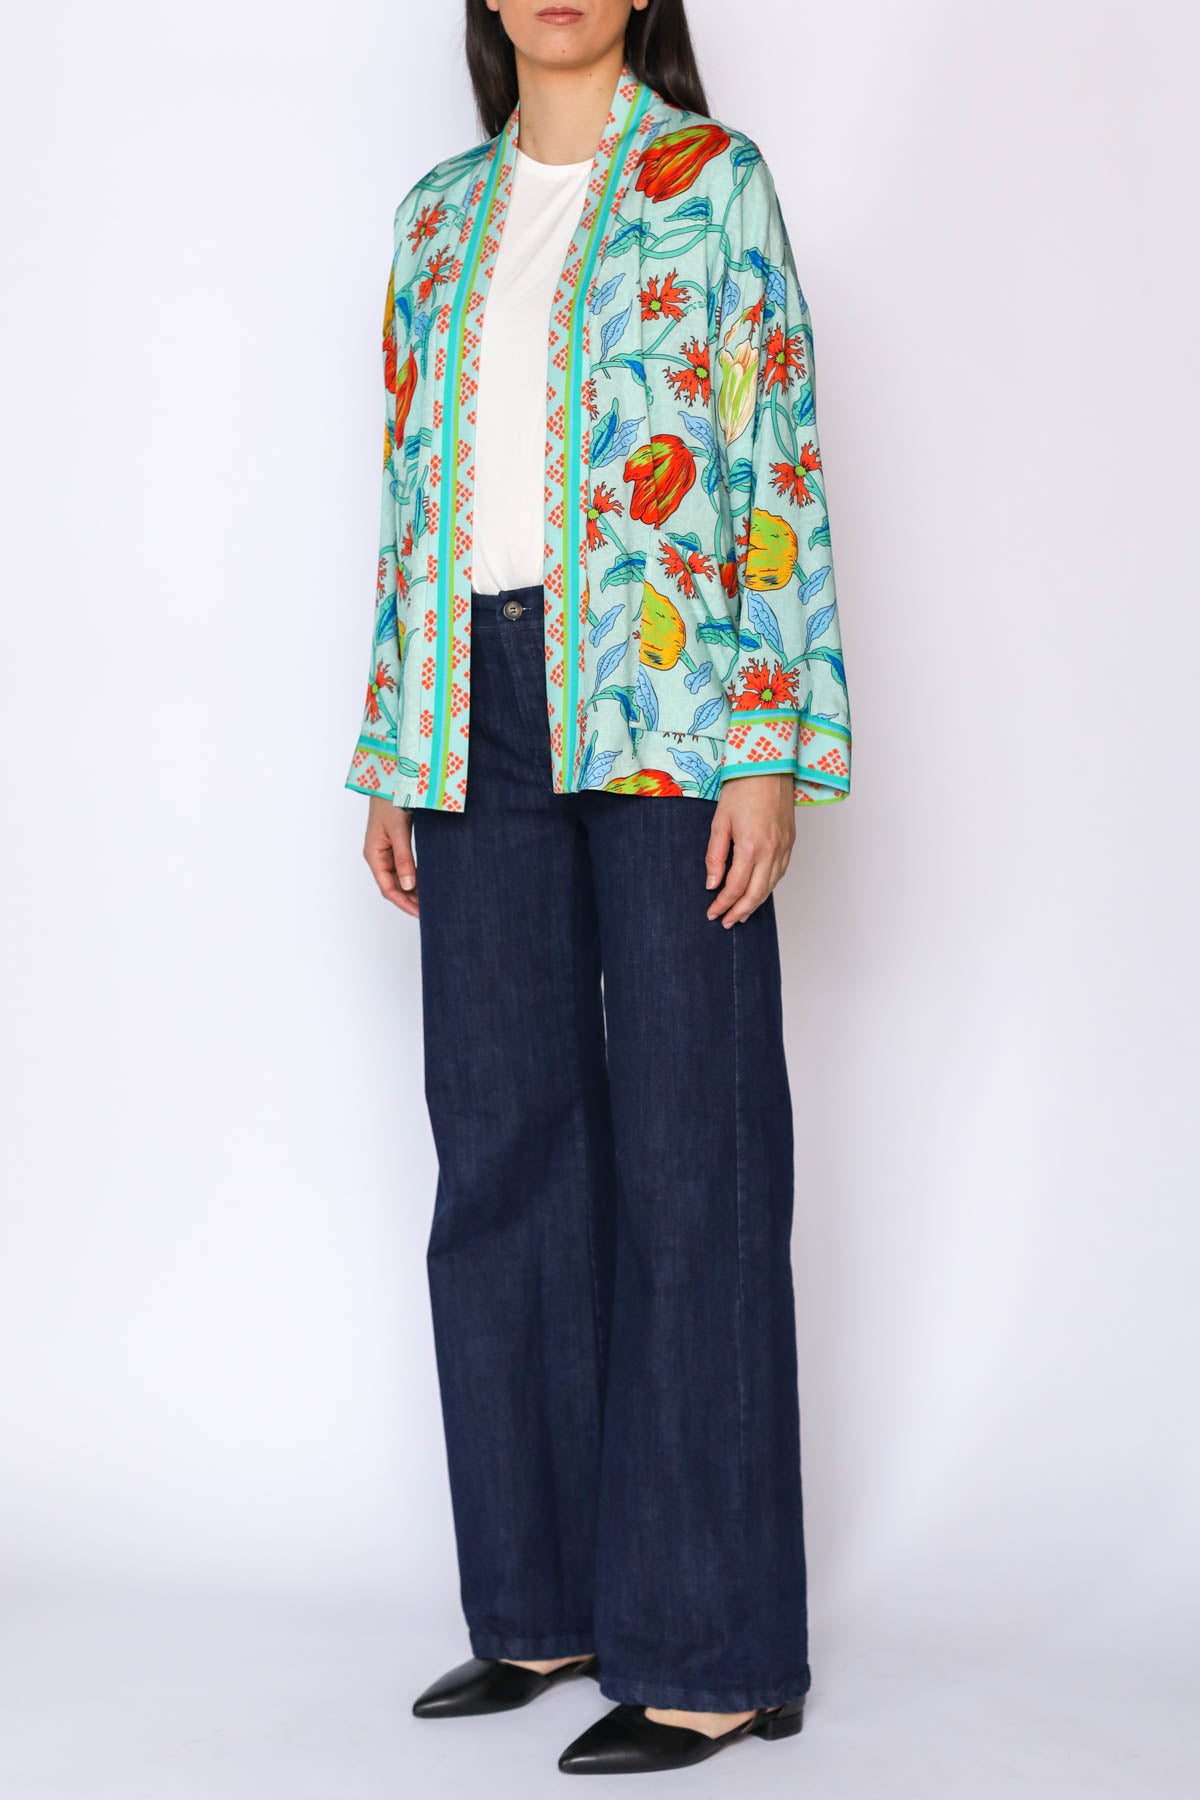 WU-SIDE - giacca kimono - ACQUA ARANCIO